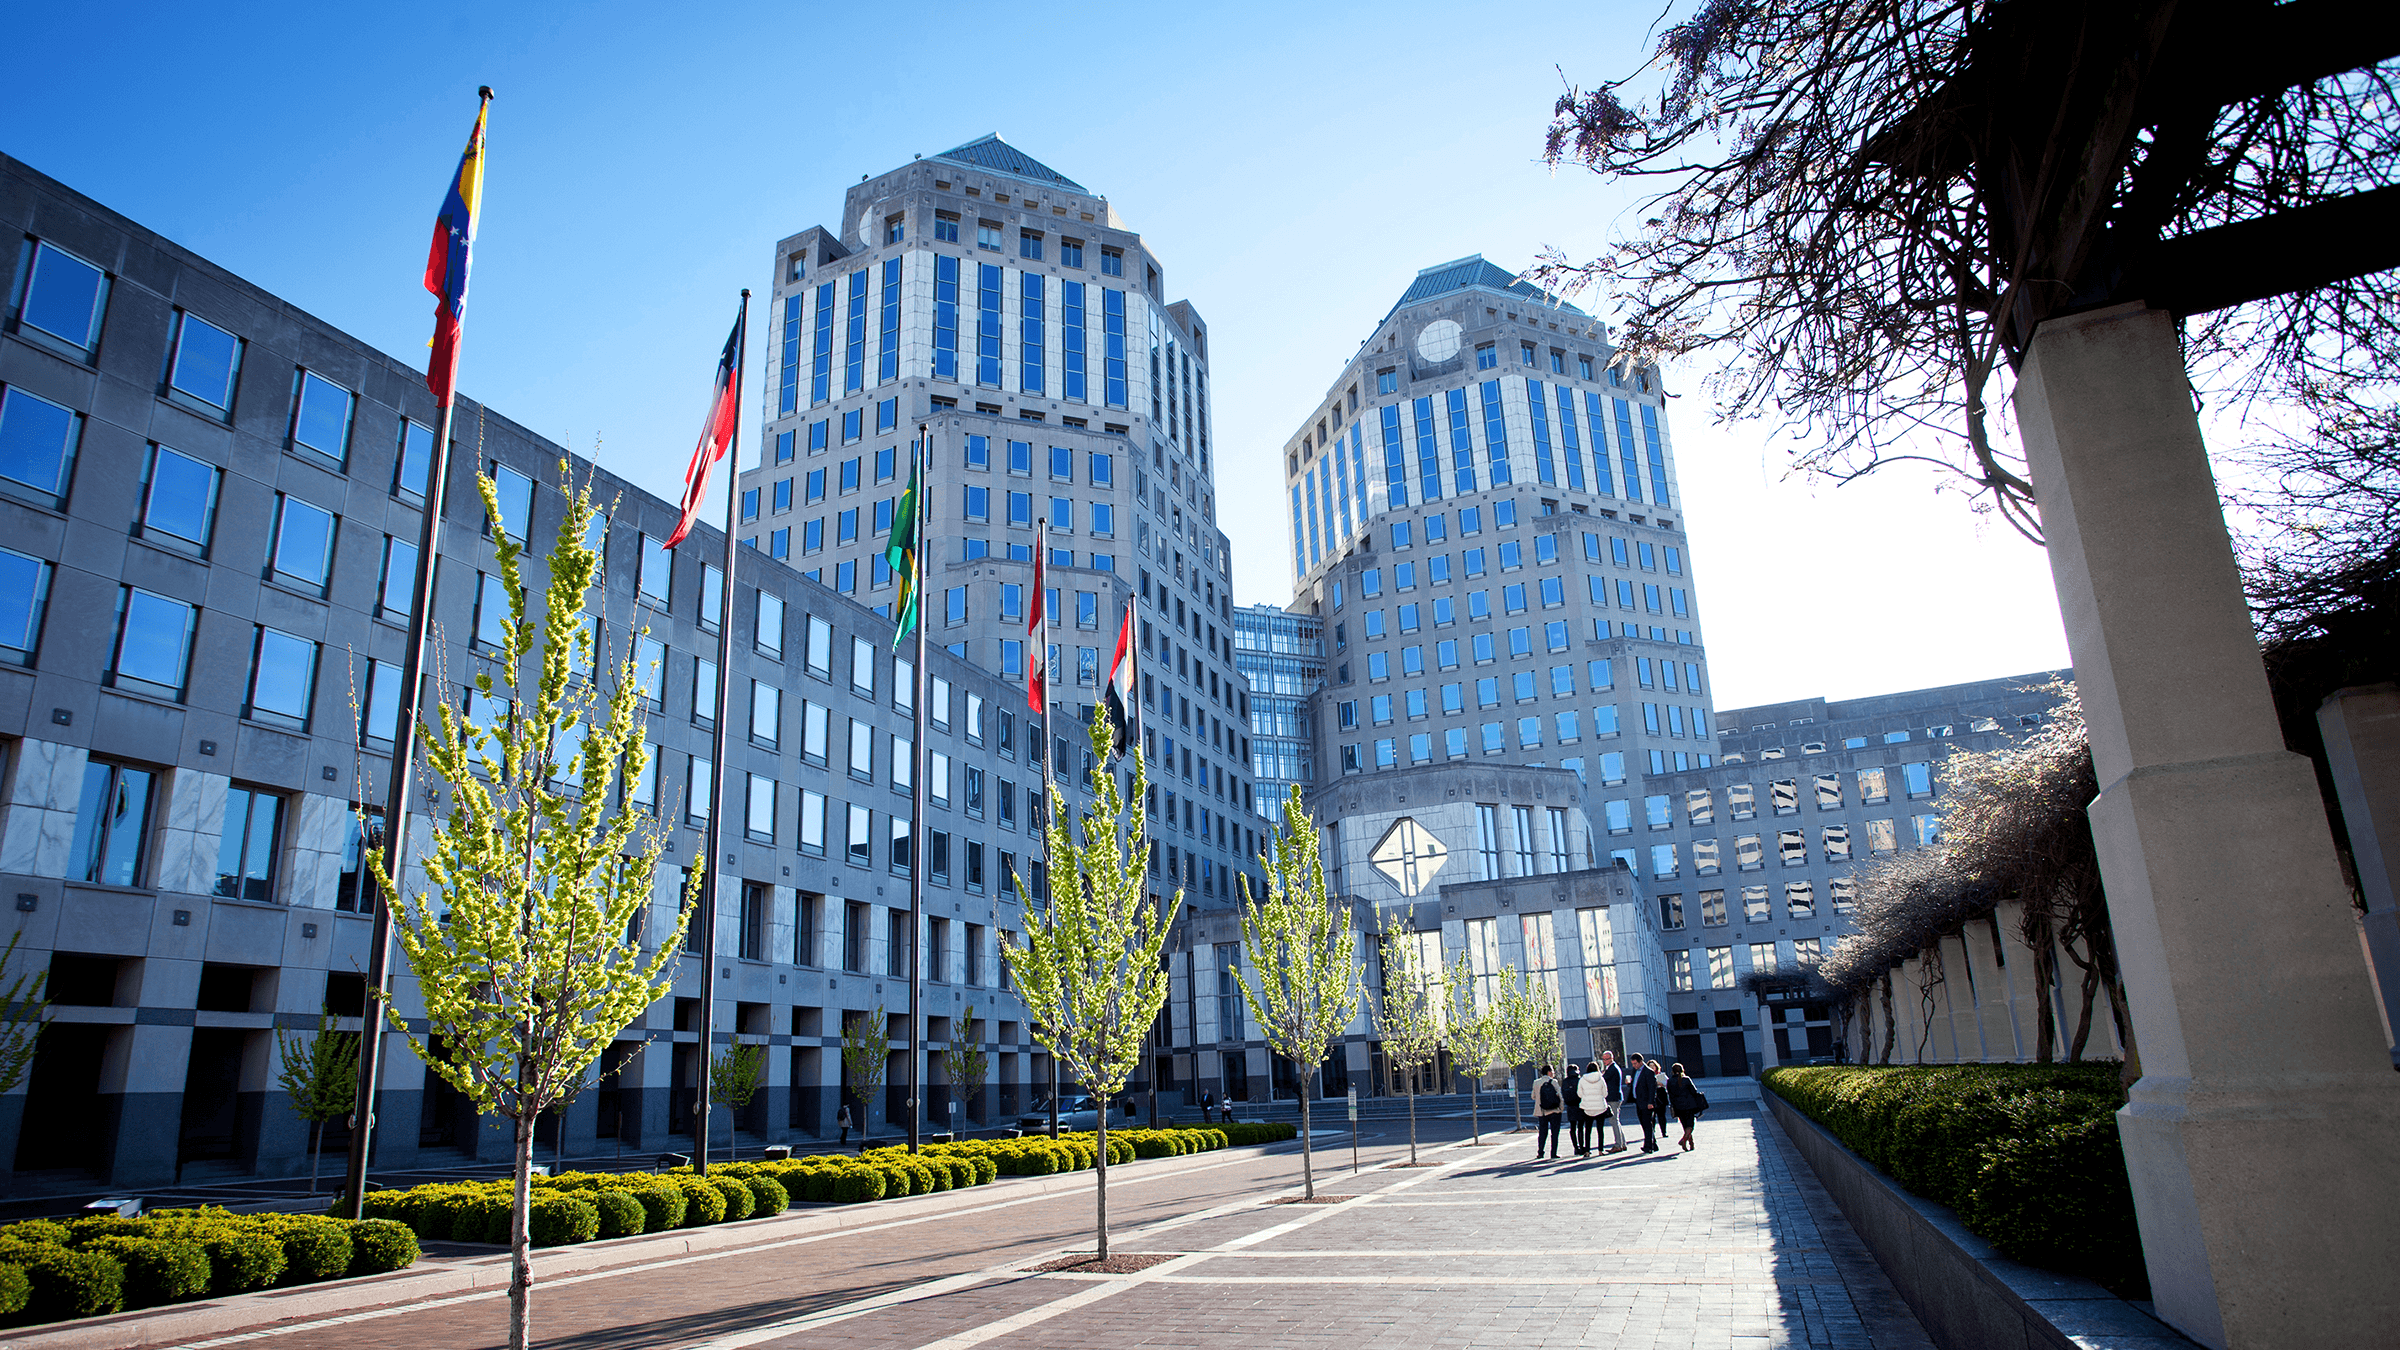 Proctor & Gamble's World HQ